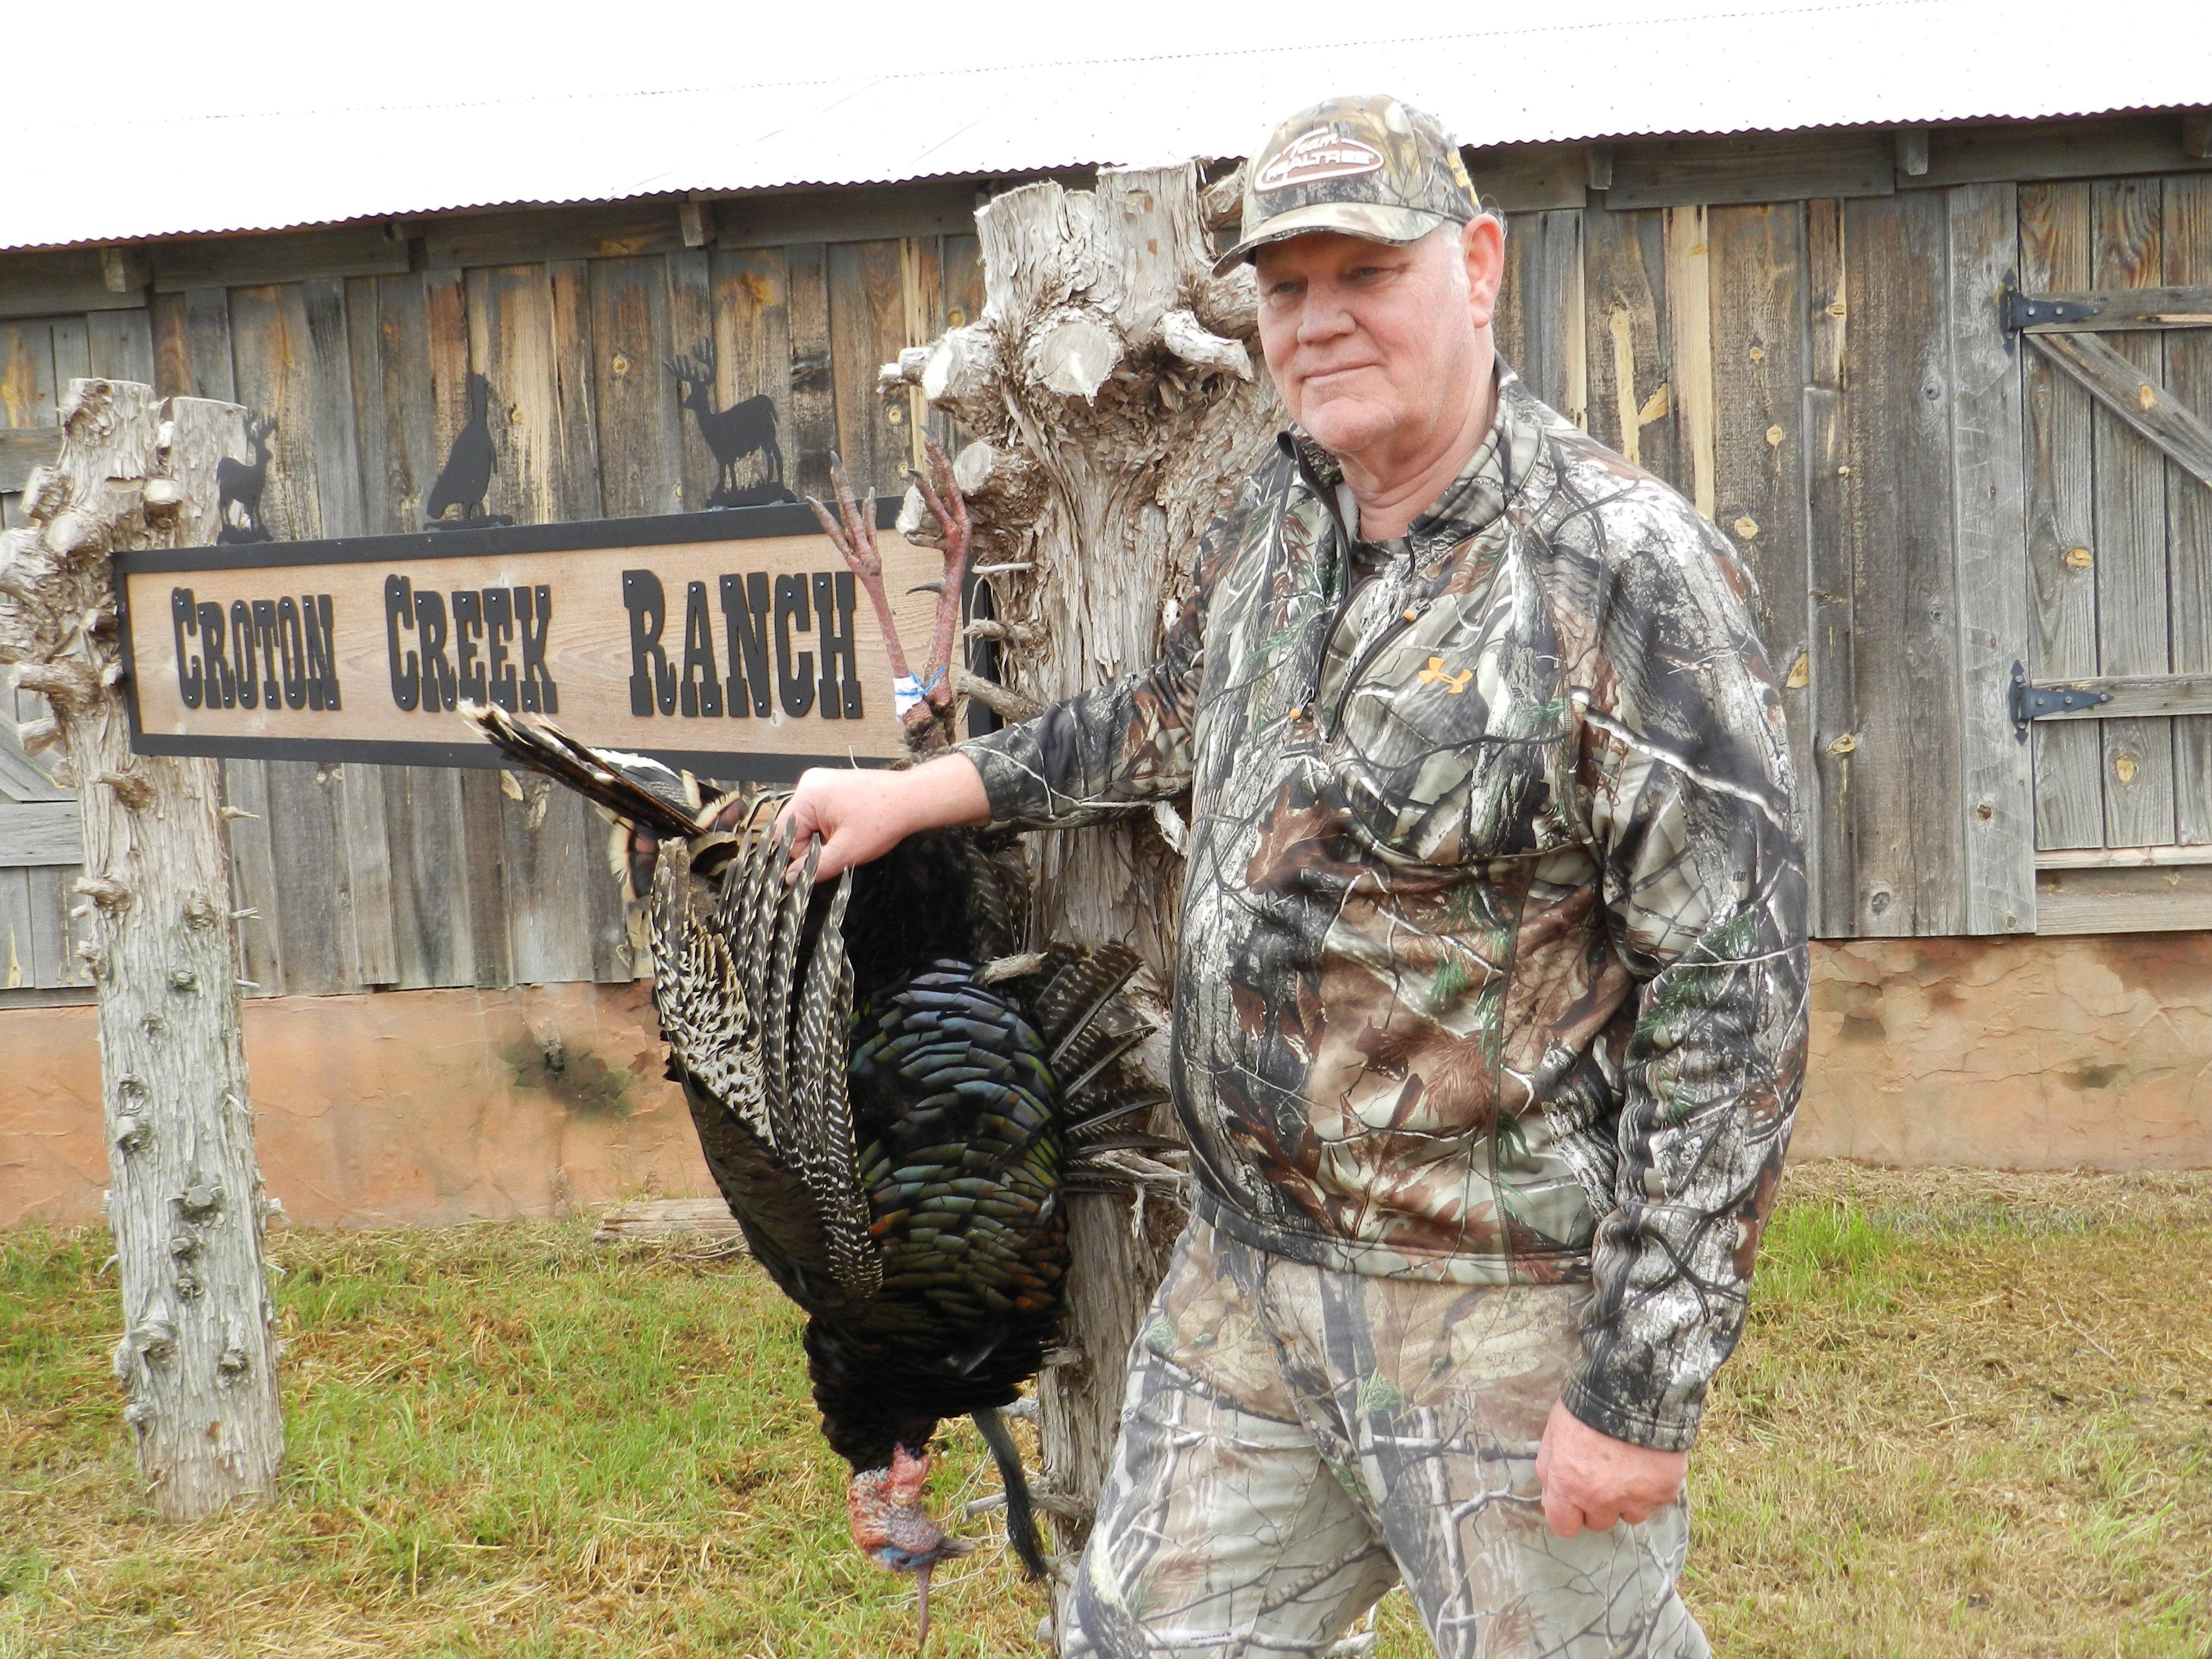 Turkey Hunting in Oklahoma (Steve Hickoff photo)